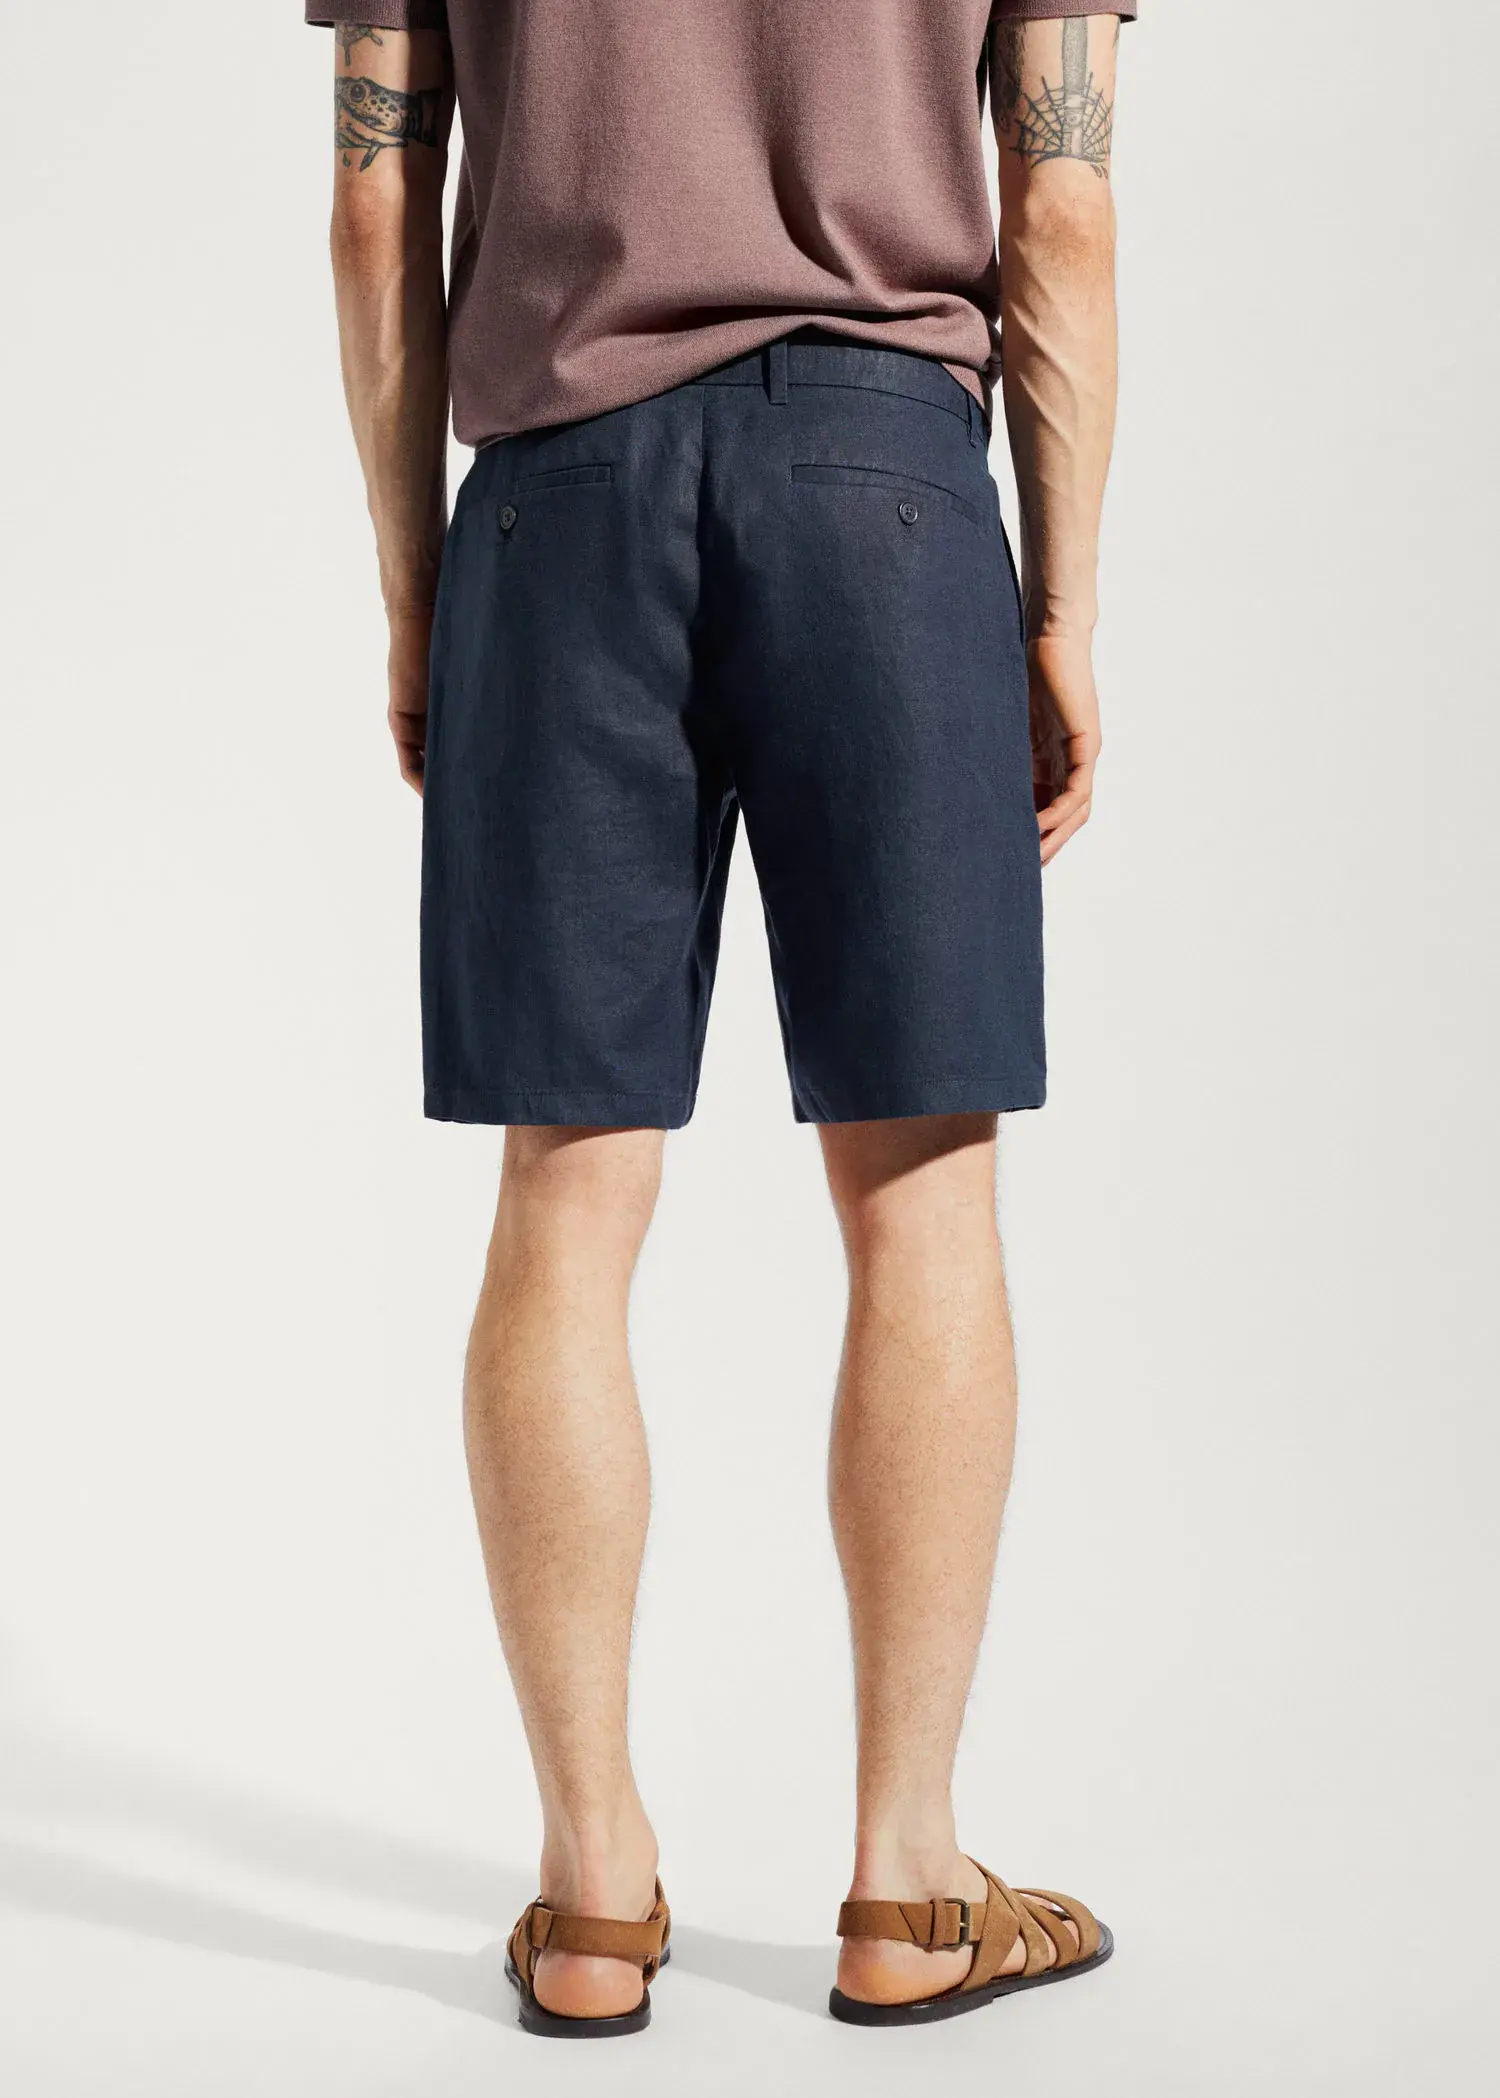 Mango 100% linen shorts. a person wearing a pair of blue shorts. 